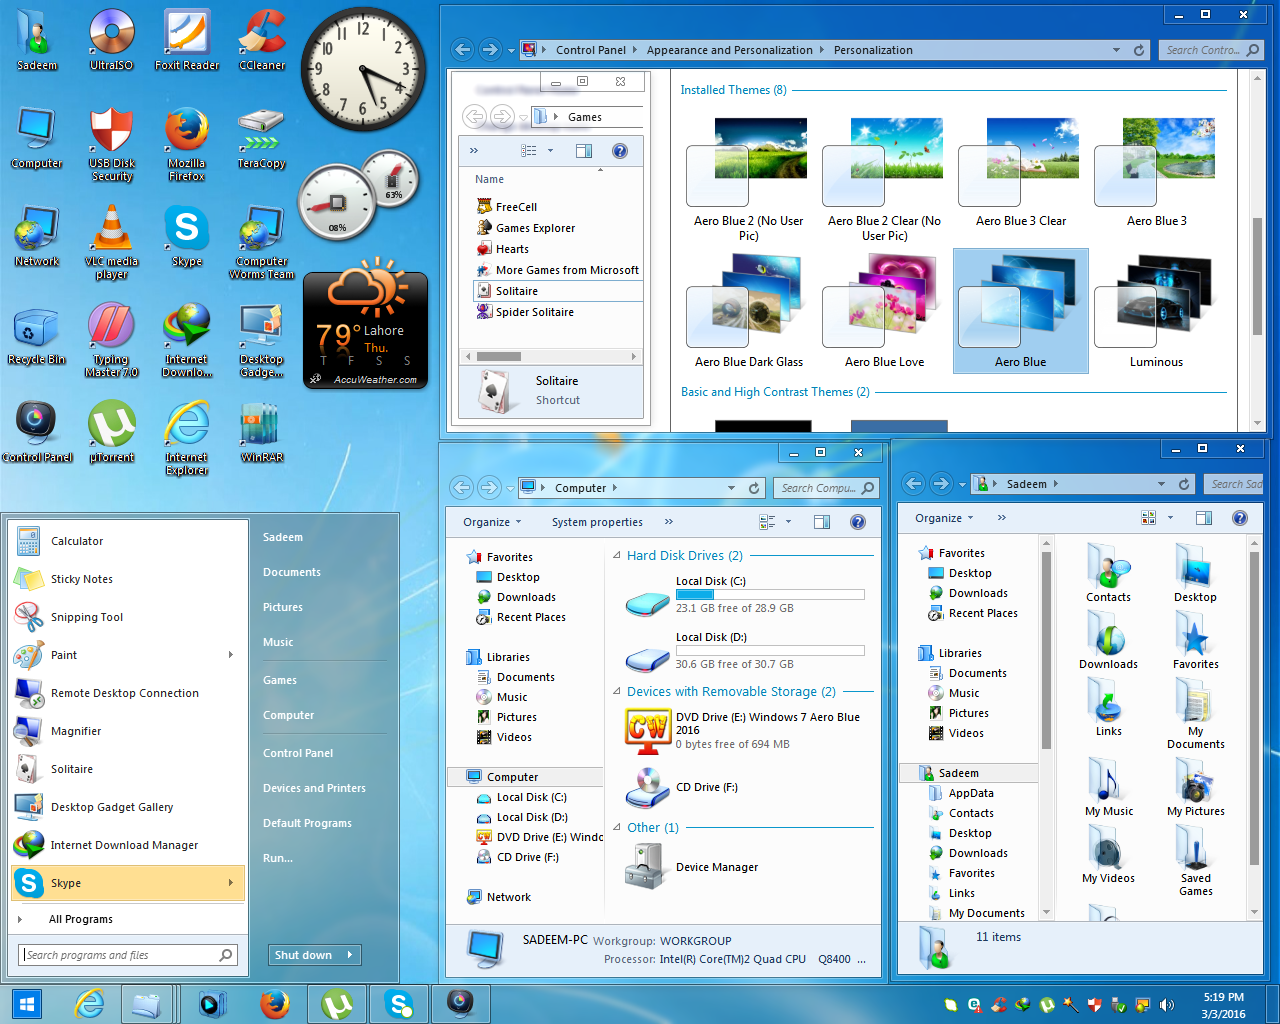 windows xp sp3 iso download torent kickass